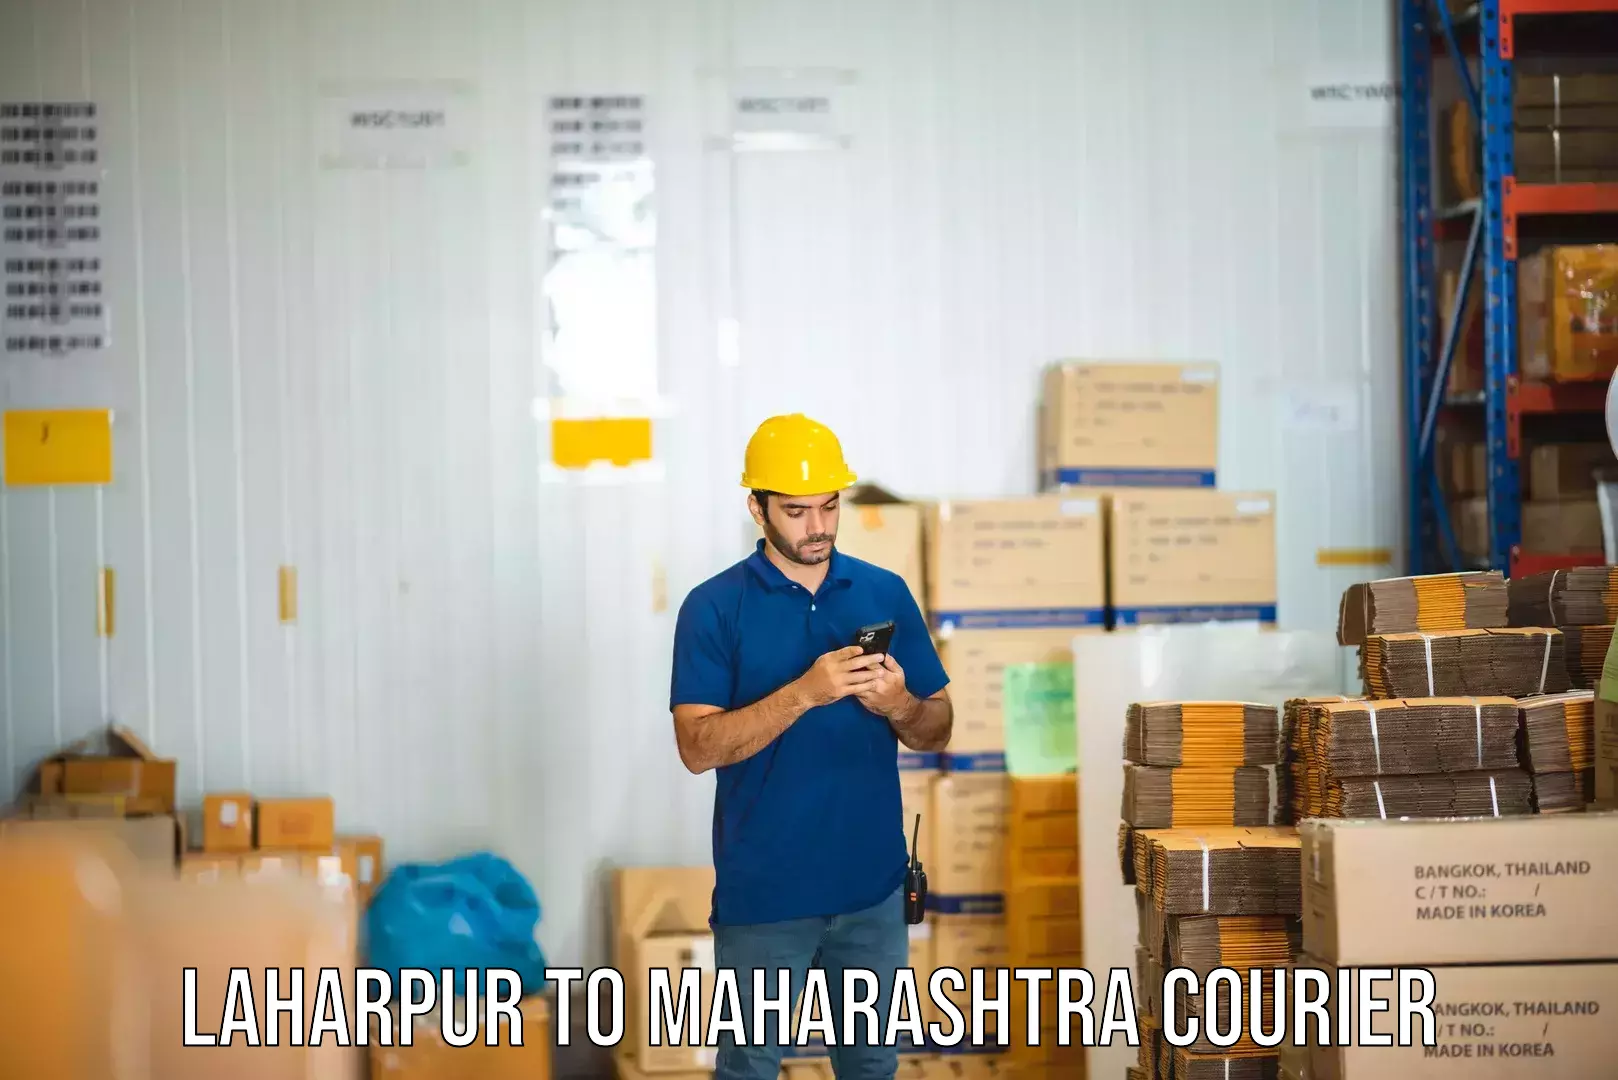 Tracking updates Laharpur to Maharashtra